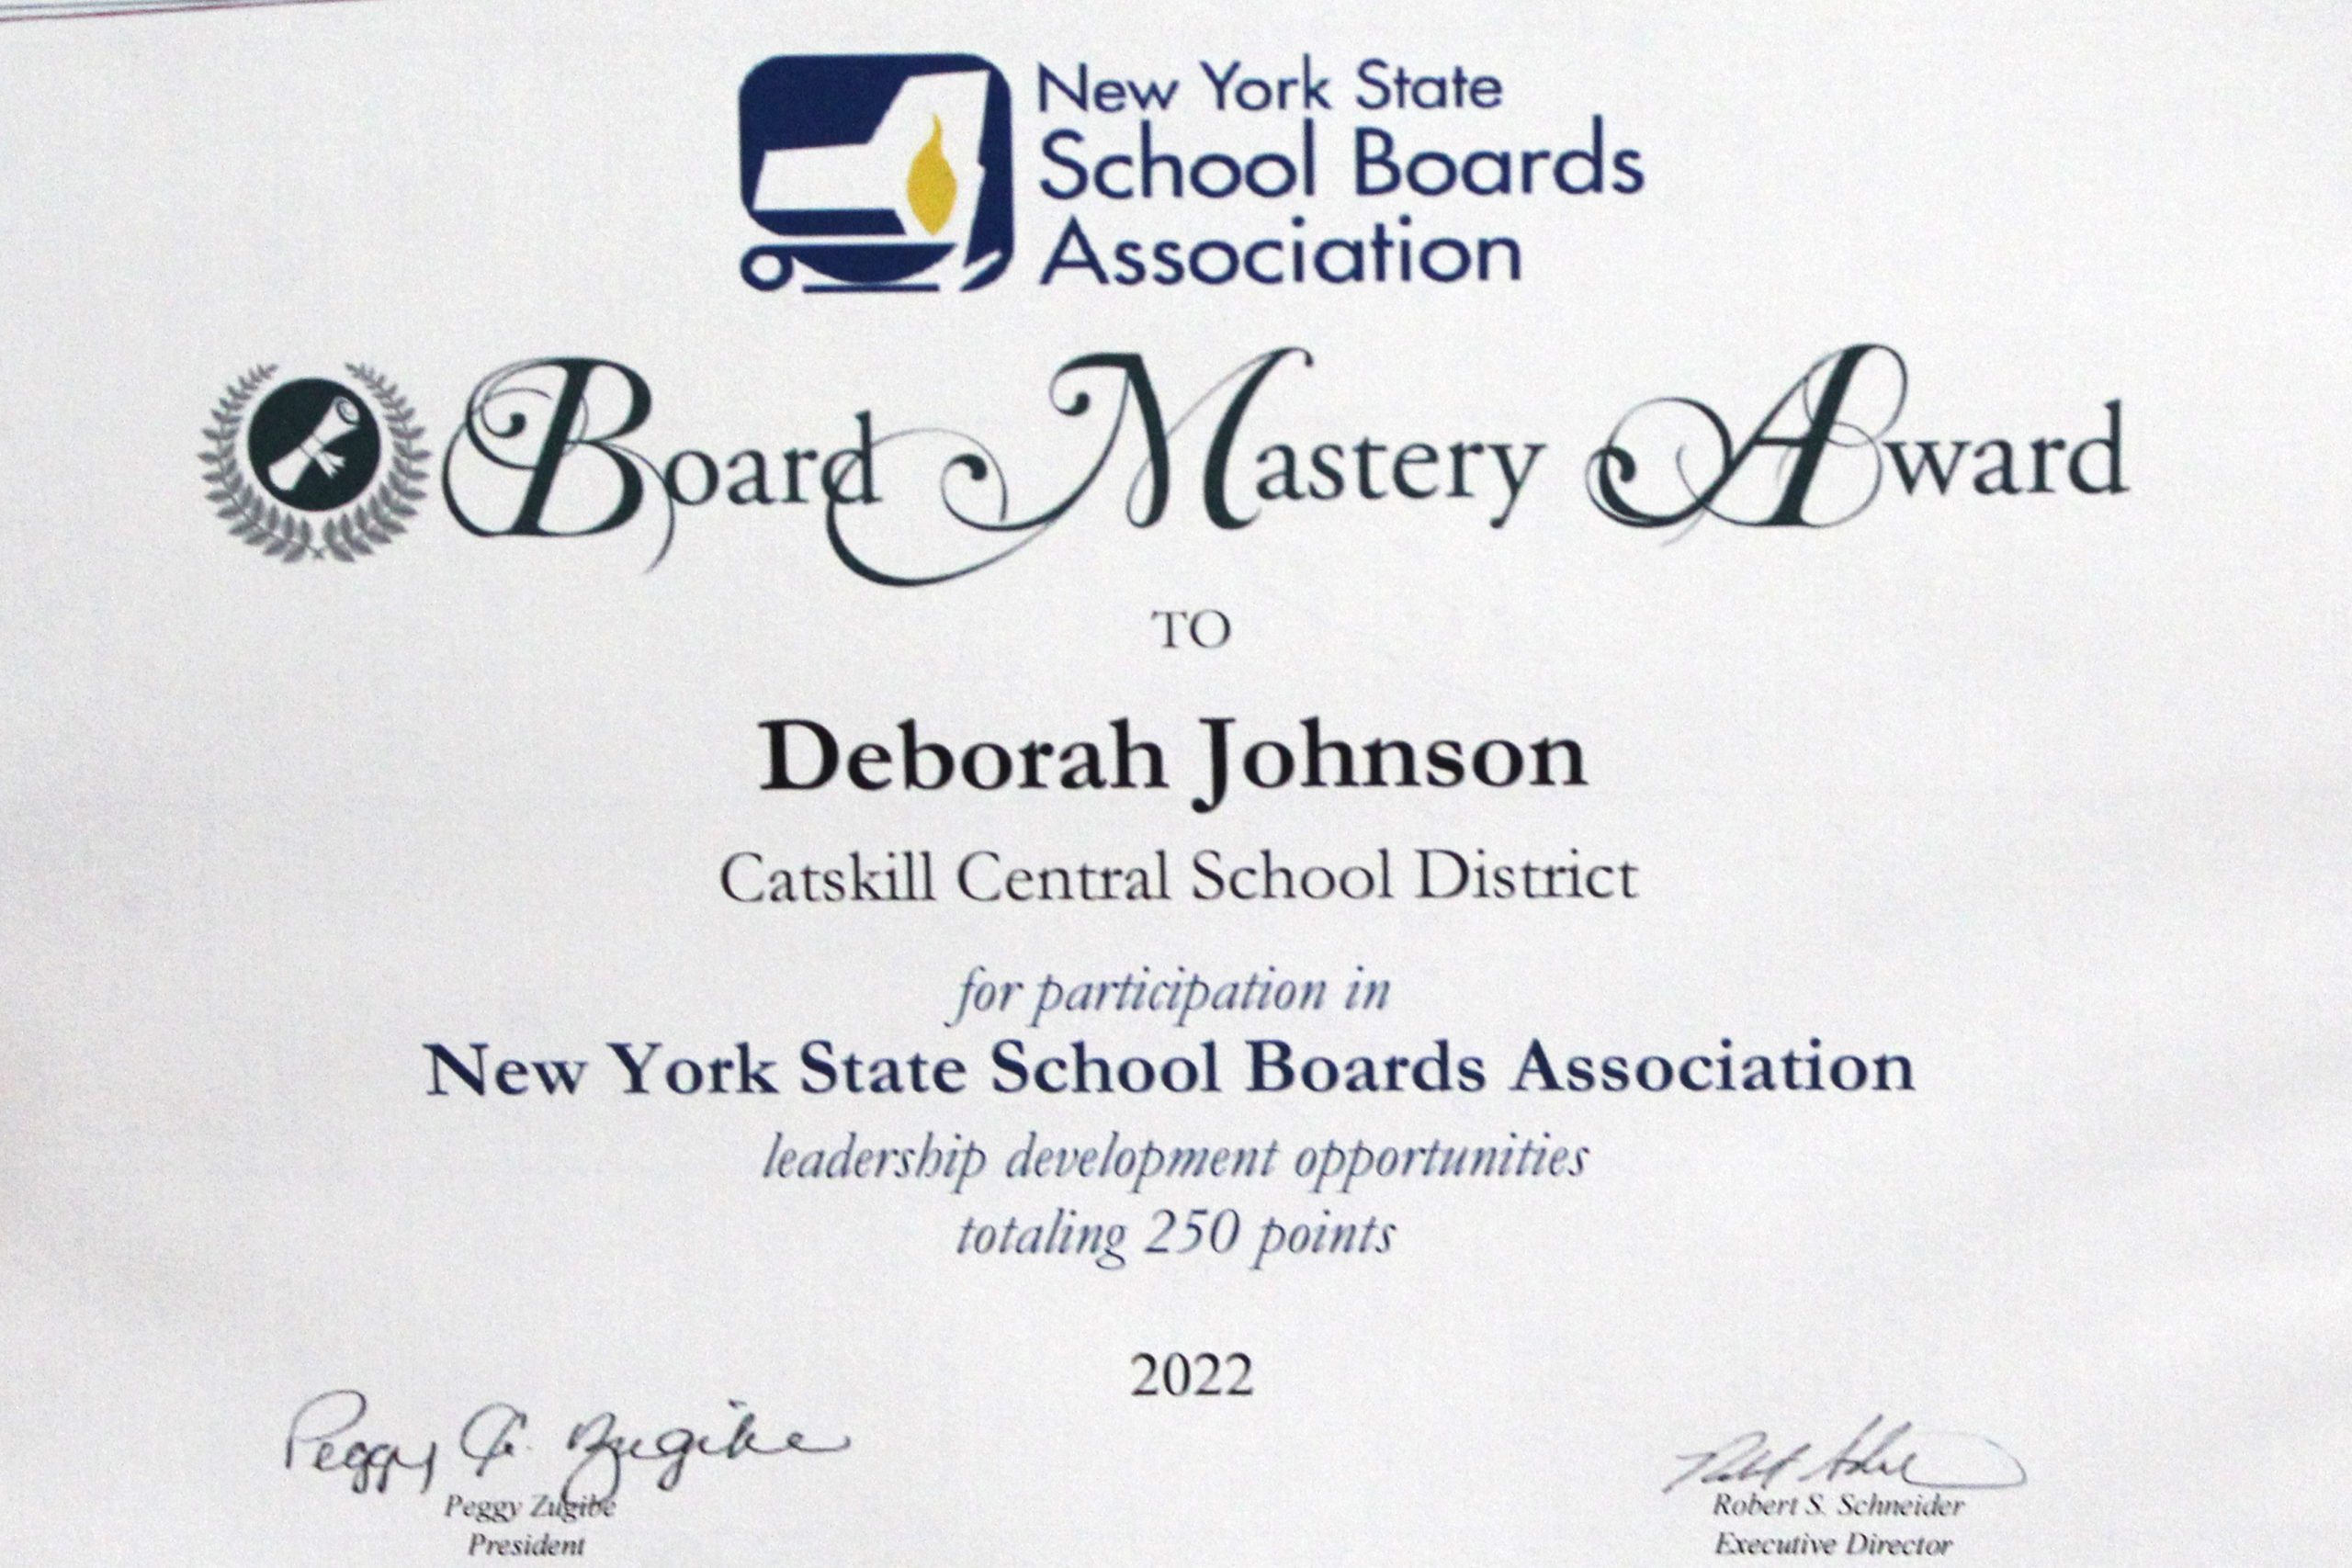 Board Mastery Award Certificate for Deborah Johnson